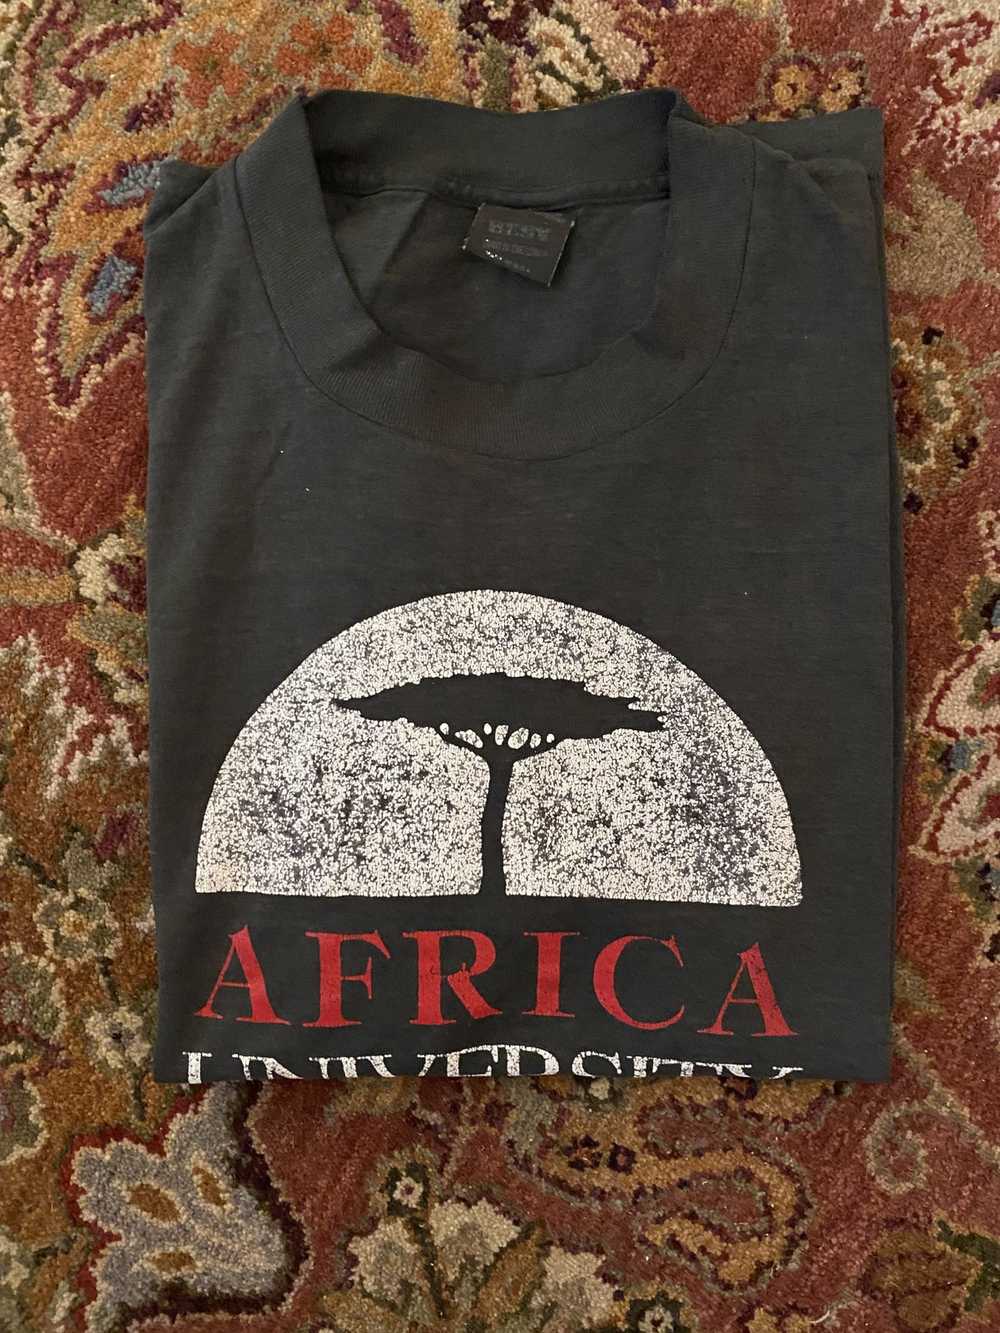 Vintage Africa University T-Shirt - image 2